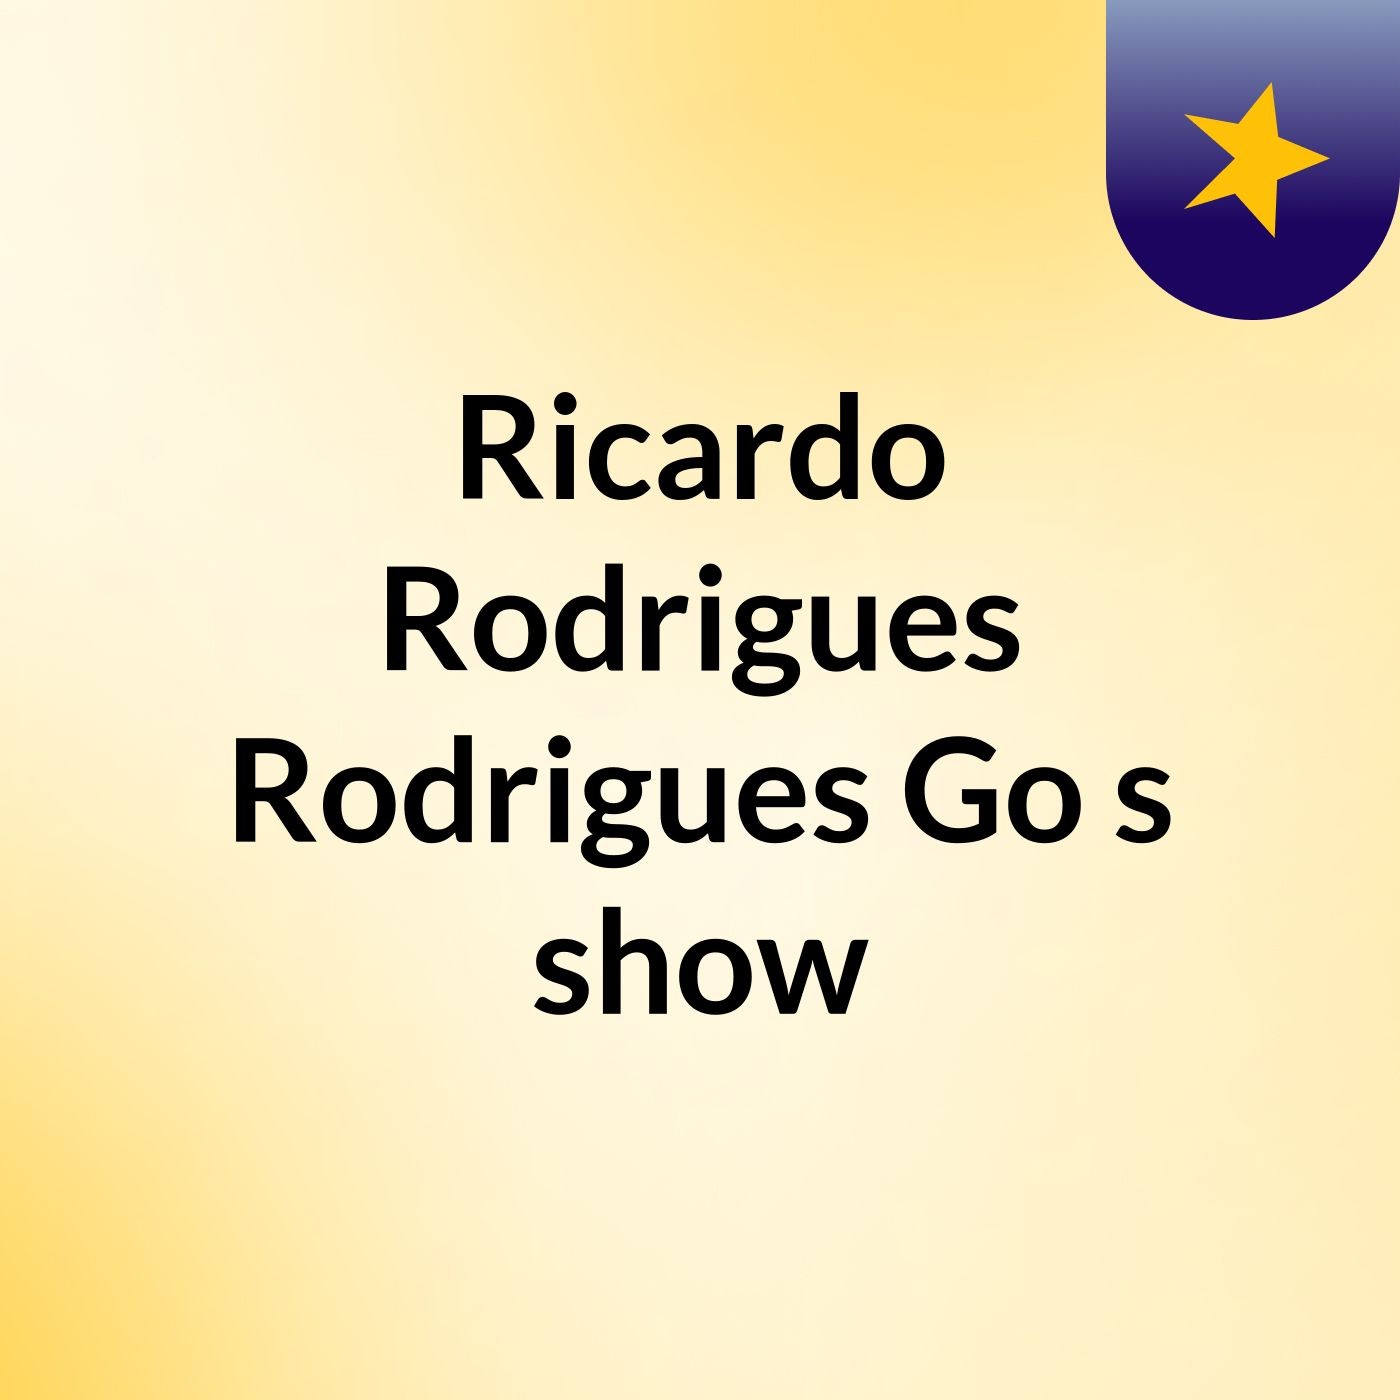 Ricardo Rodrigues Rodrigues Go's show